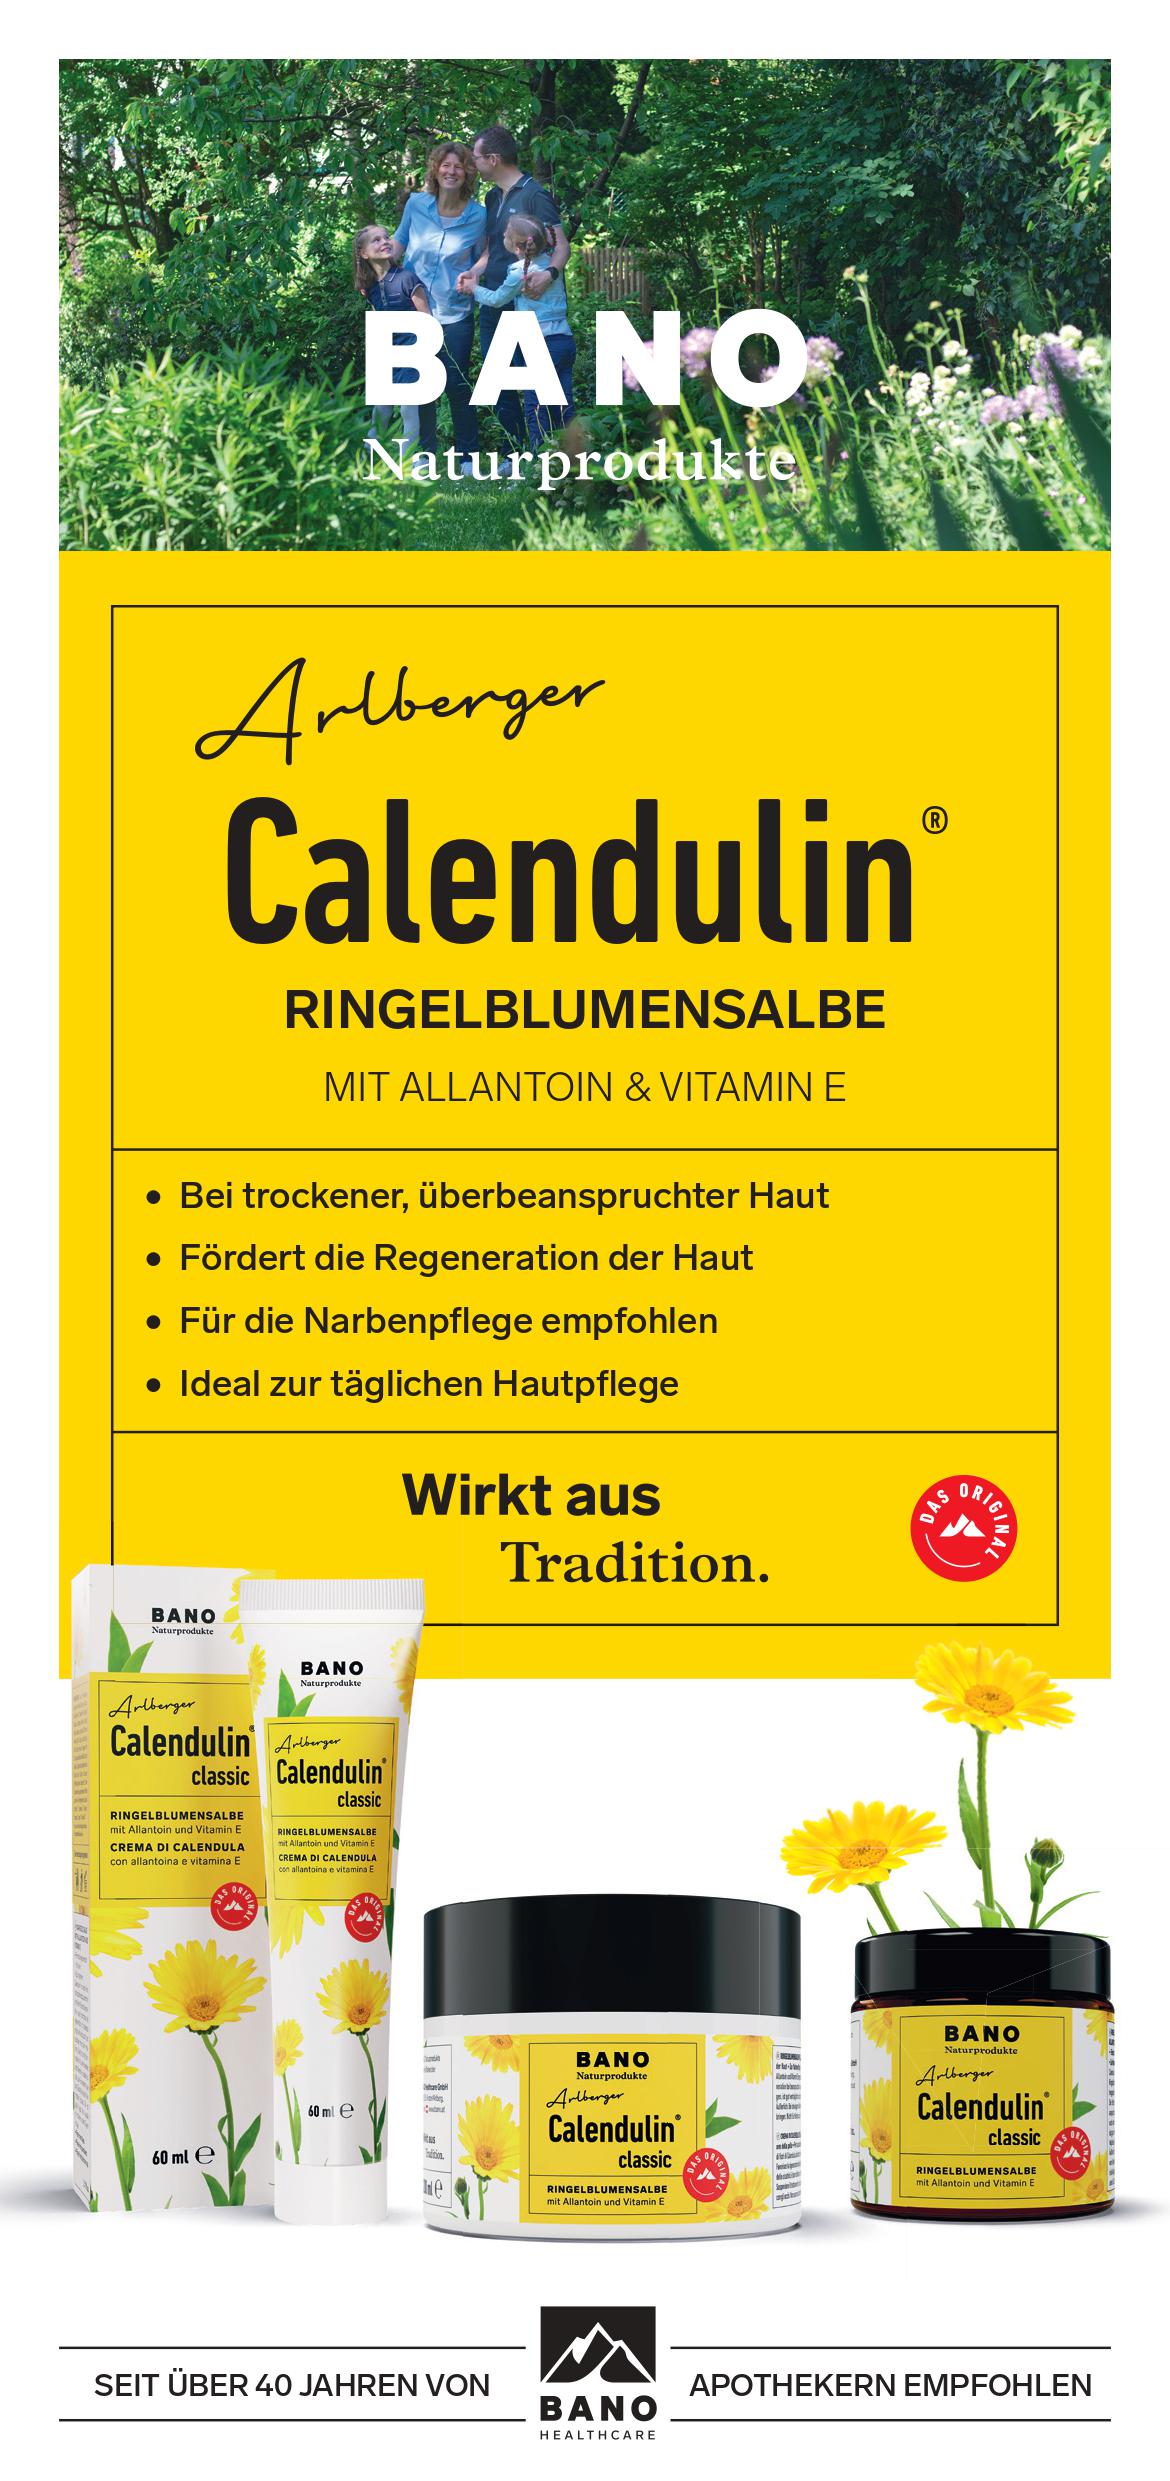 Arlberger Calendulin Classic calendulazalf